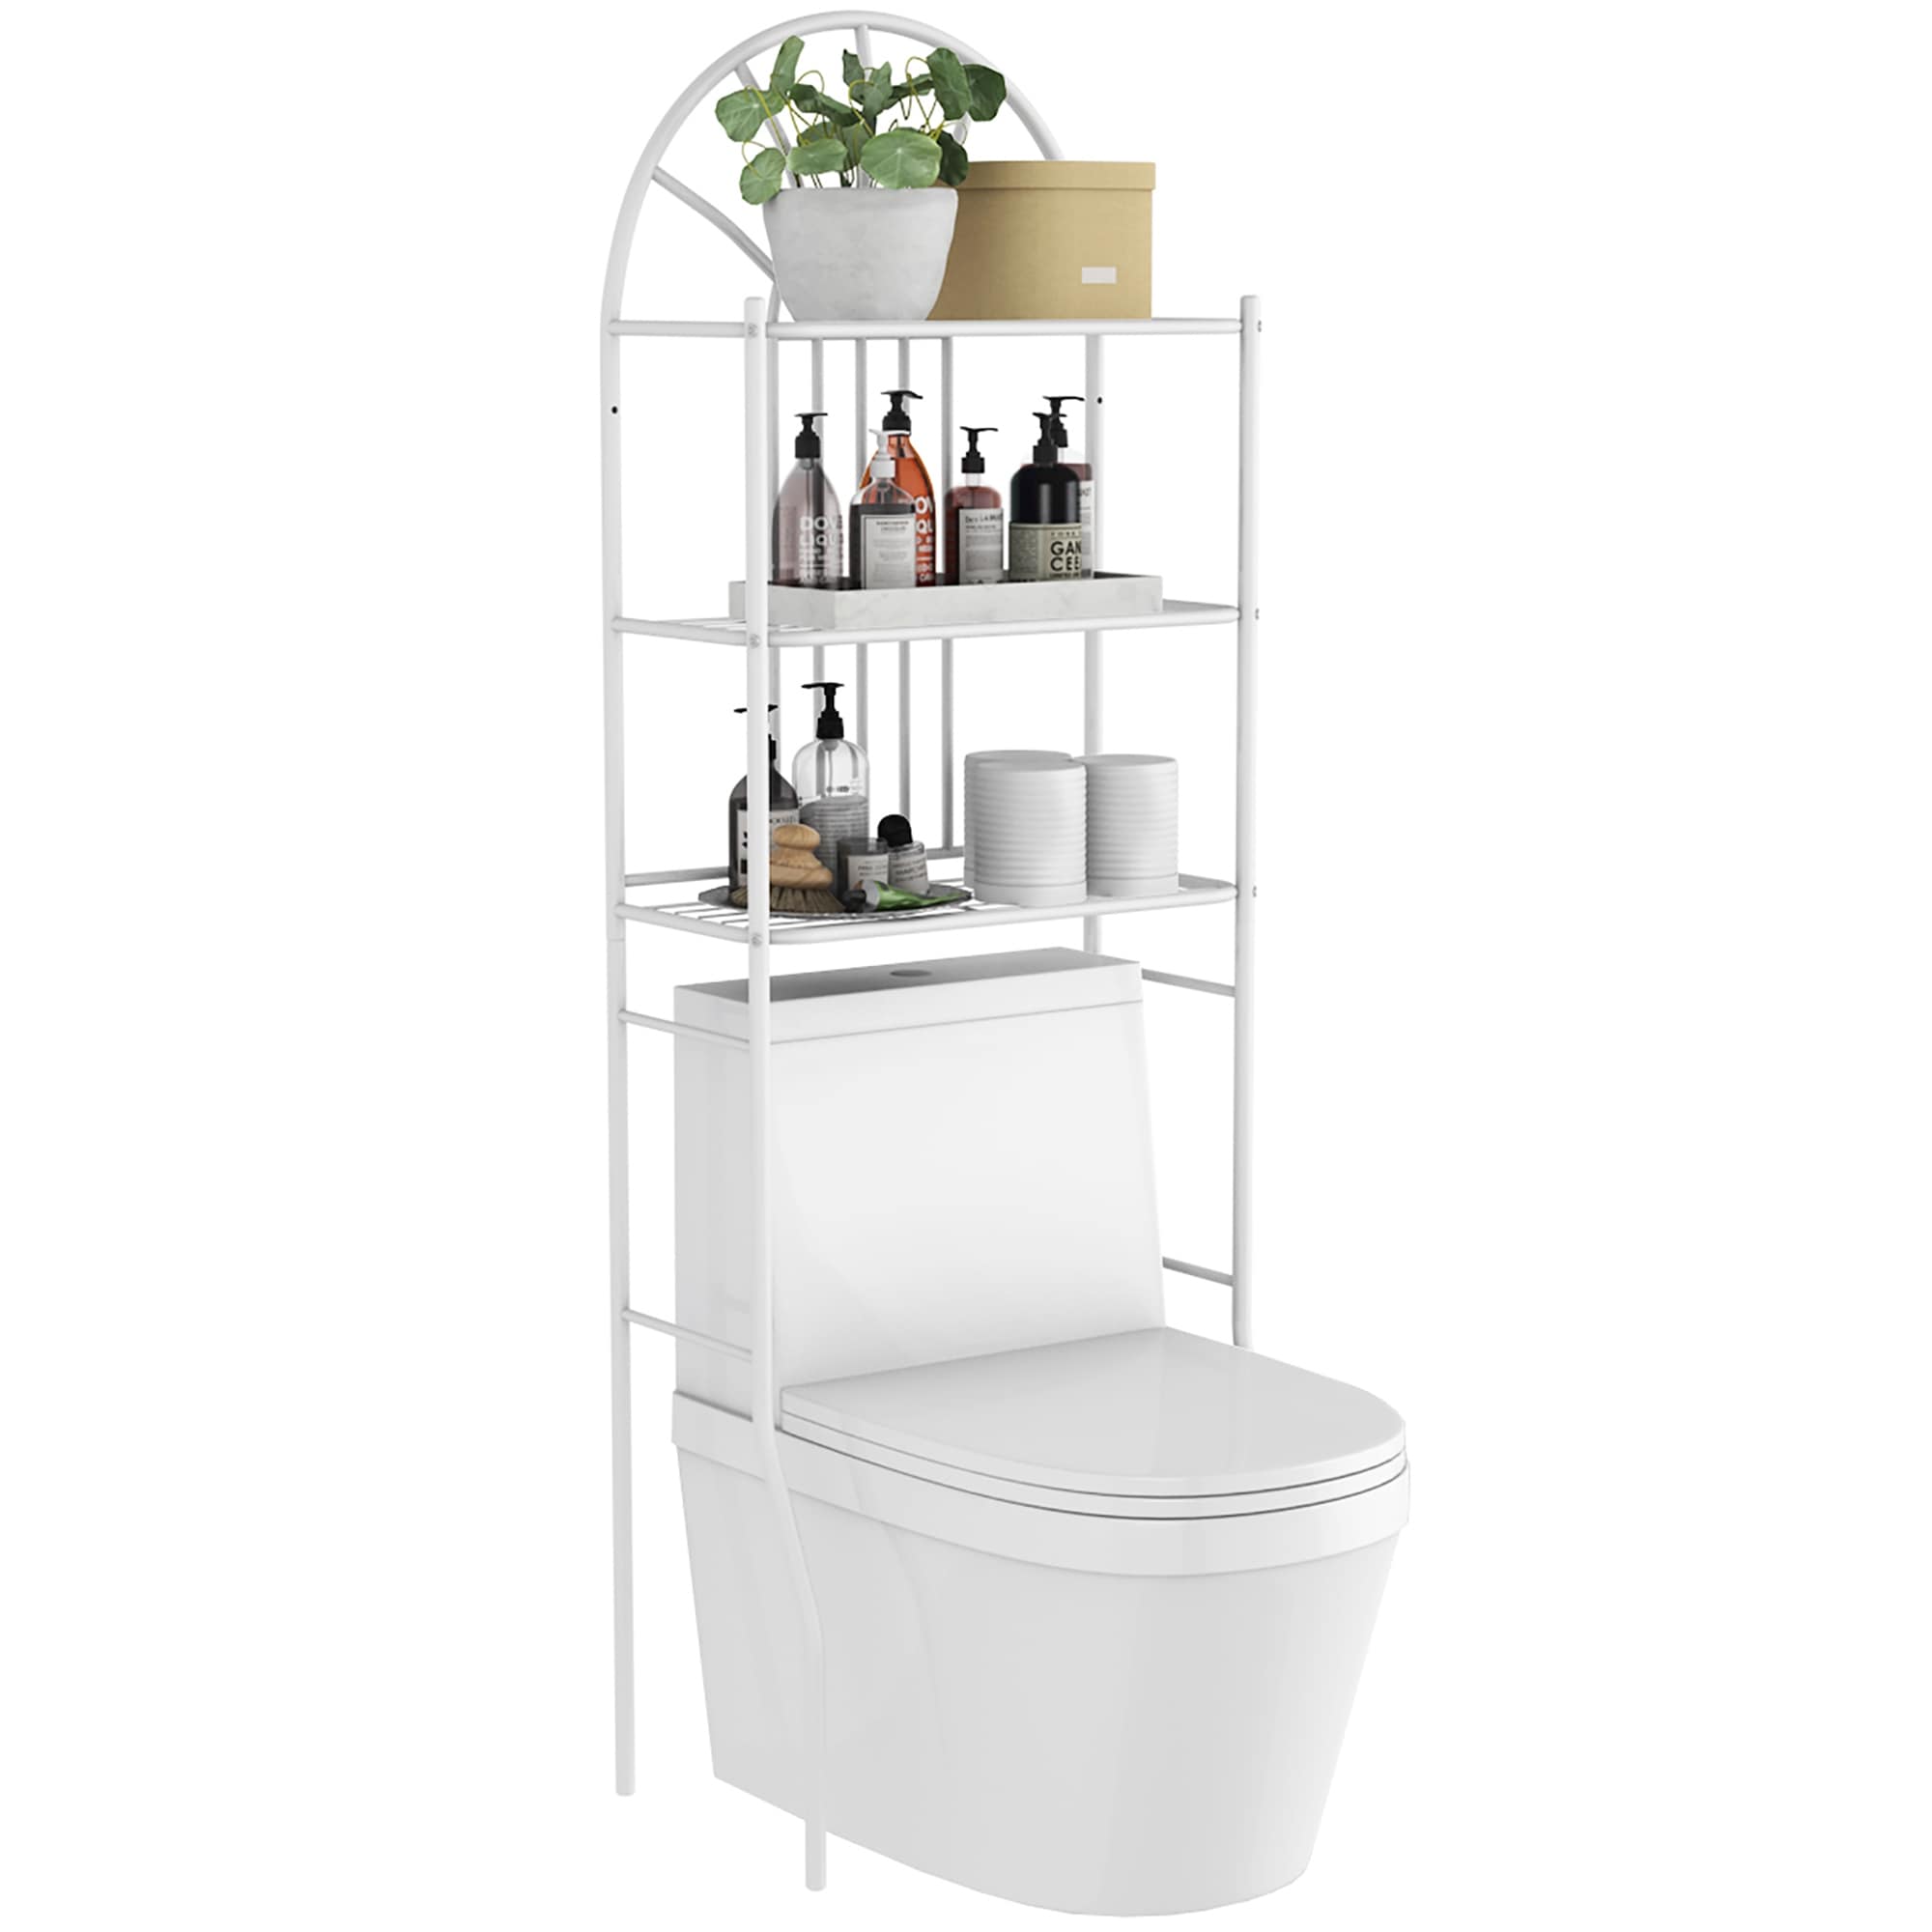 https://ak1.ostkcdn.com/images/products/is/images/direct/7cfea7a60f4f9c6ff899a1ed3720c0f5c5739a60/3-Tier-Over-Toilet-Storage-Rack-Bathroom-Organizer-with-Metal-Shelf.jpg